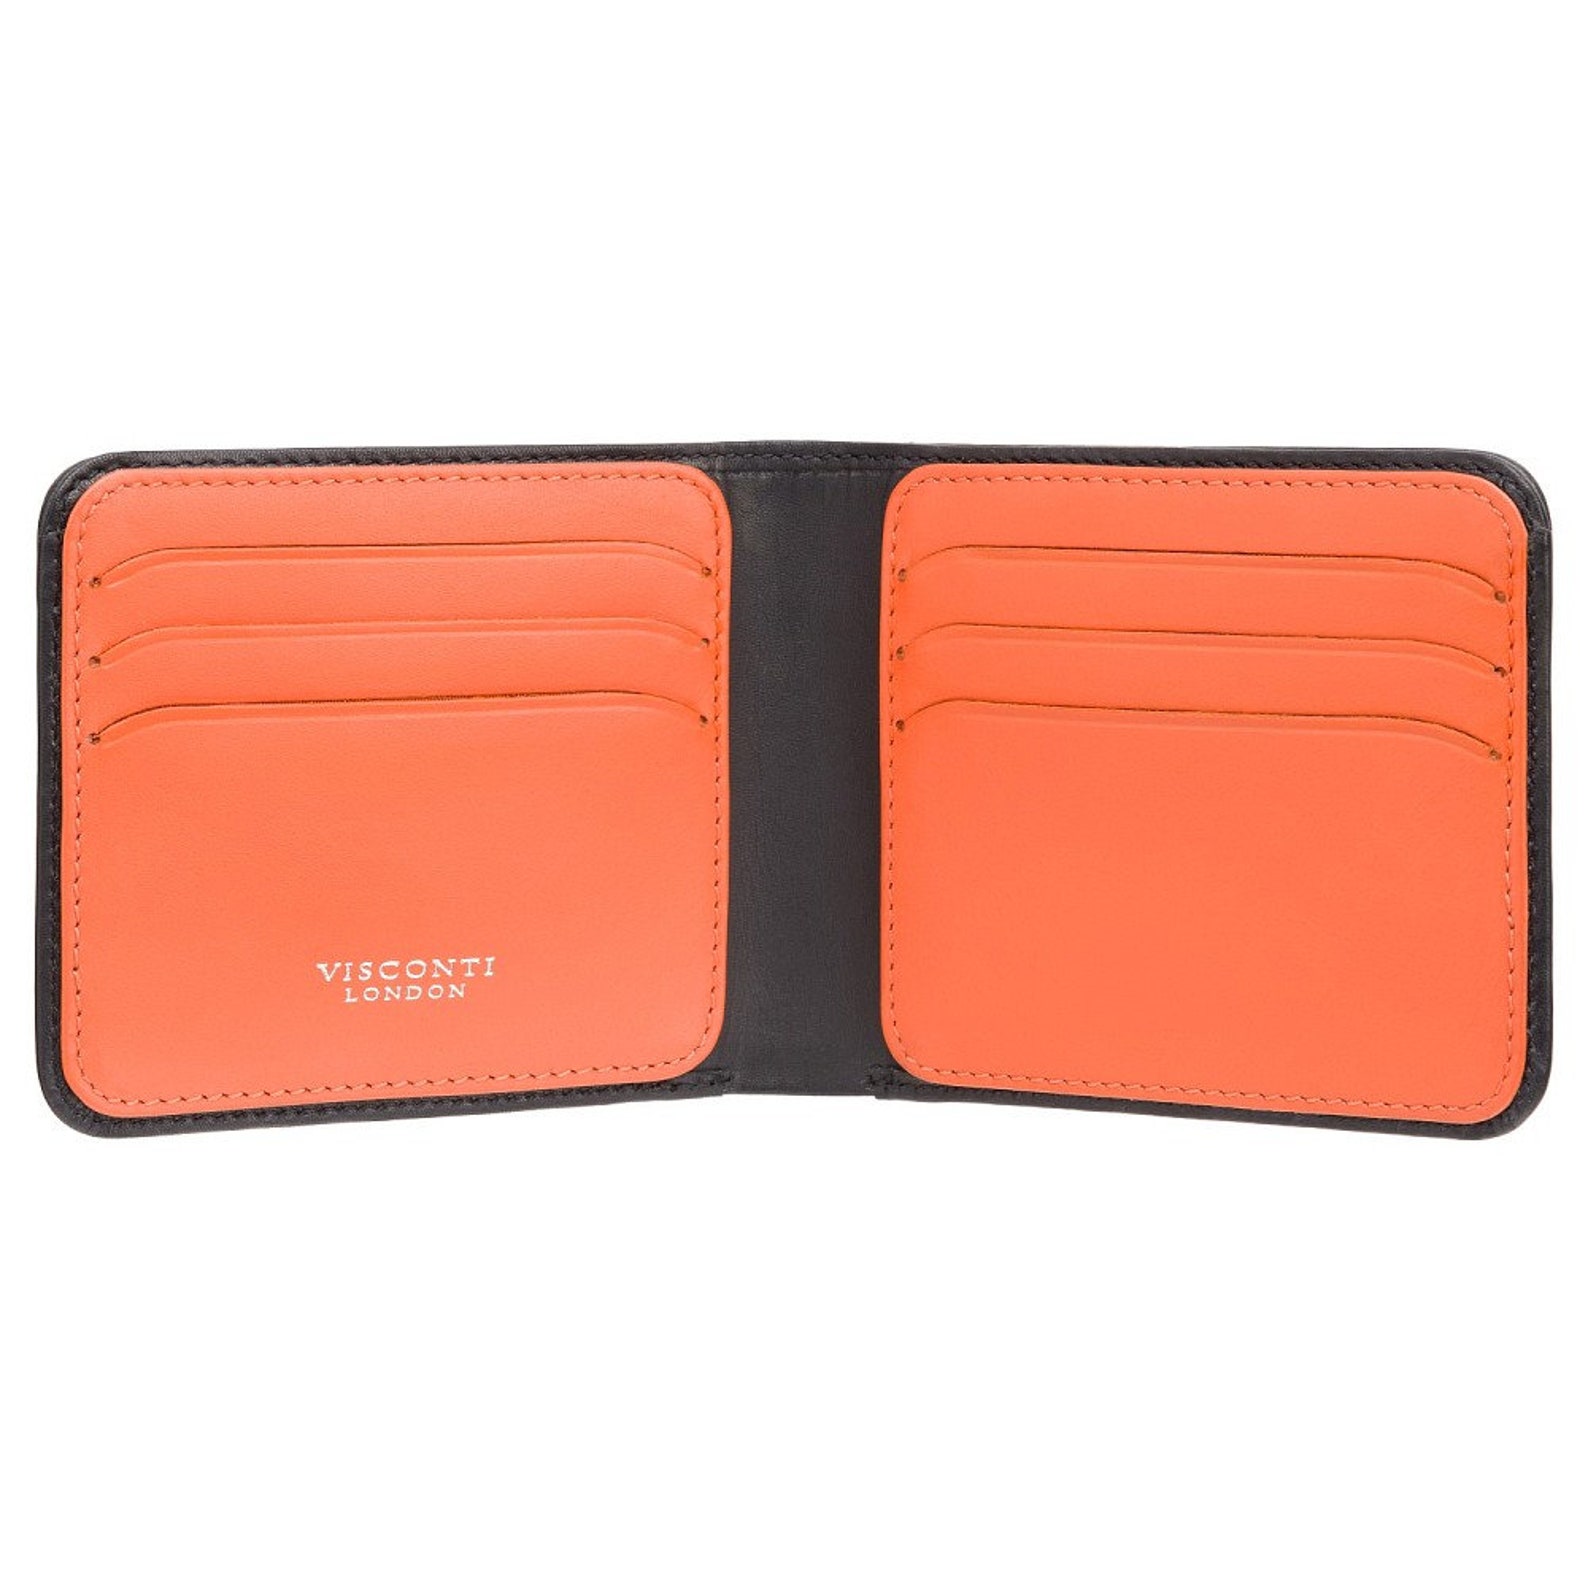 VISCONTI RFID Super Slim Leather Wallet Black / Orange - Etsy